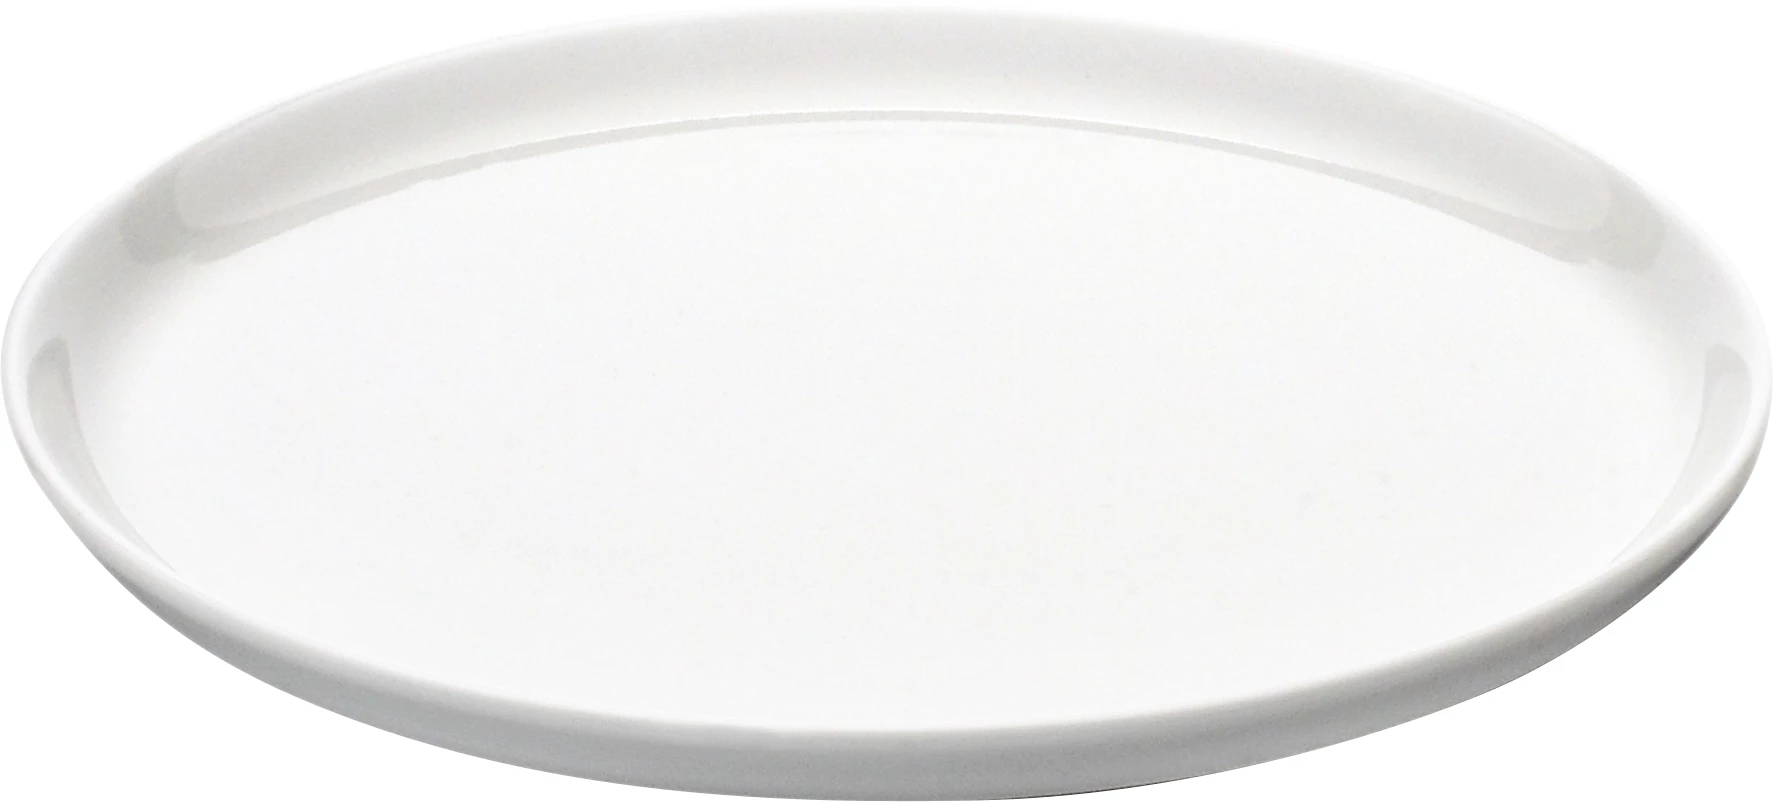 Figgjo Front Dining flad tallerken uden fane, ø15 cm